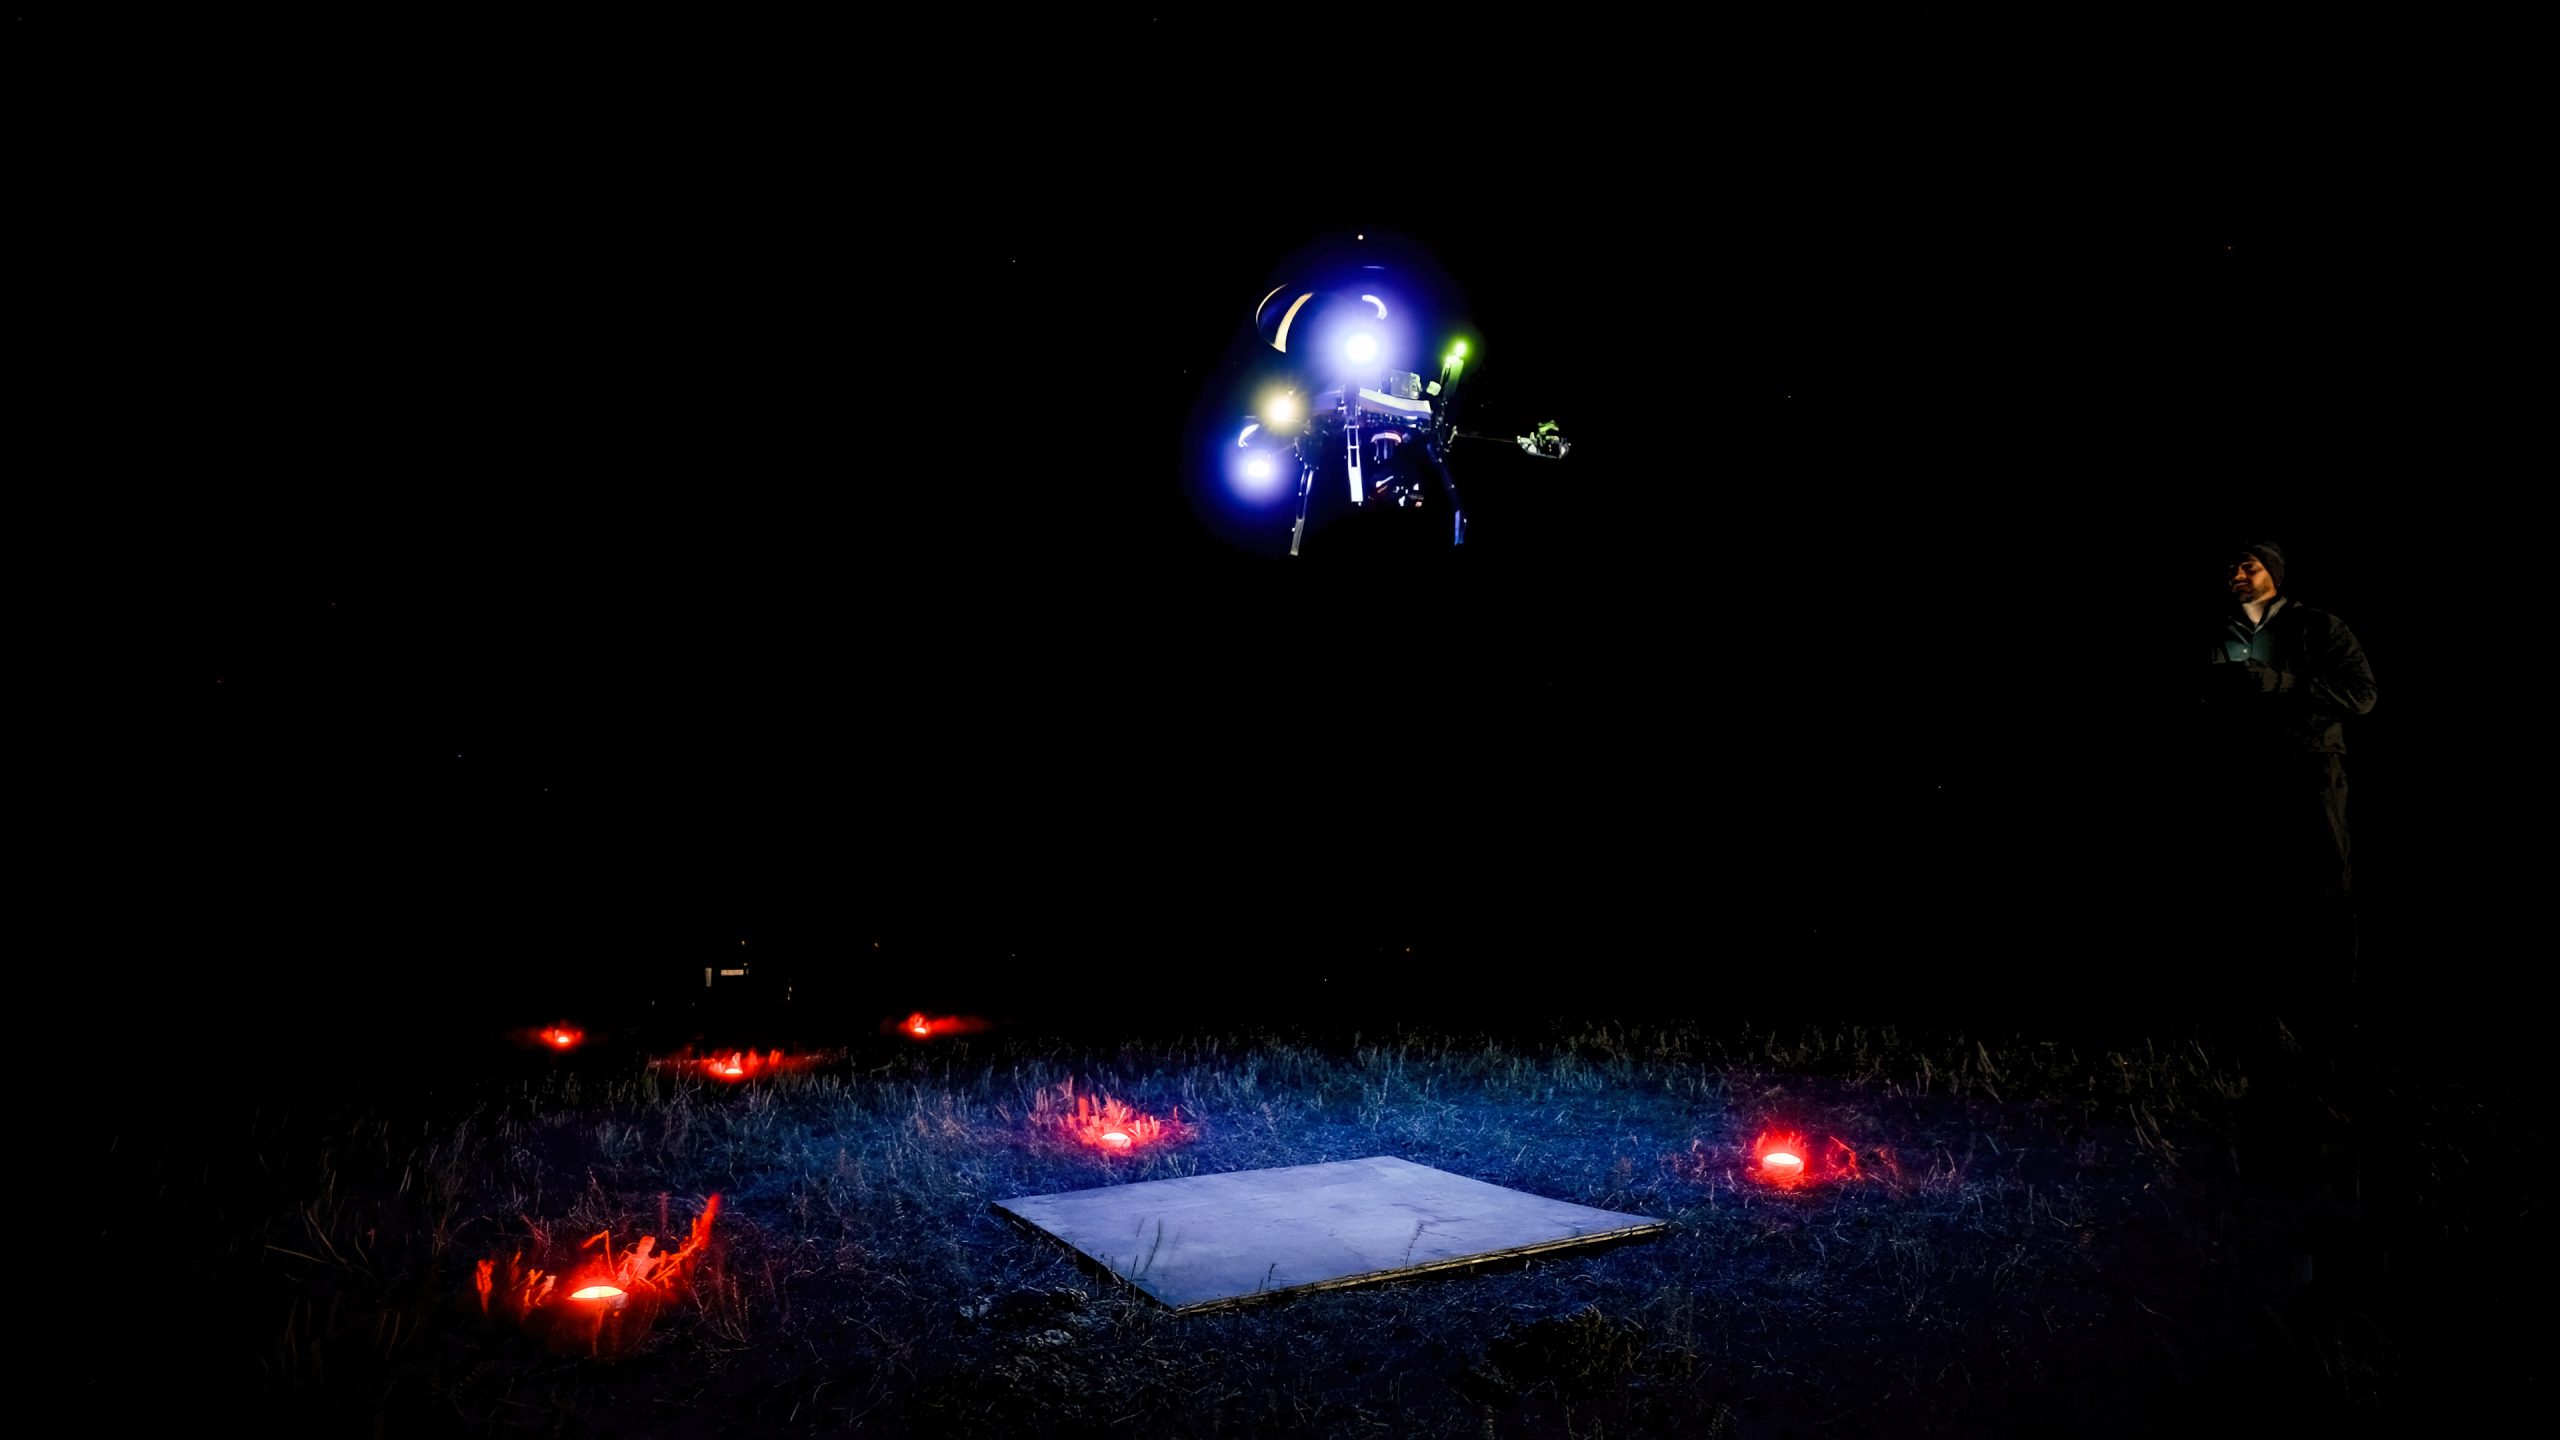 Landing drone after thermal ferret survey